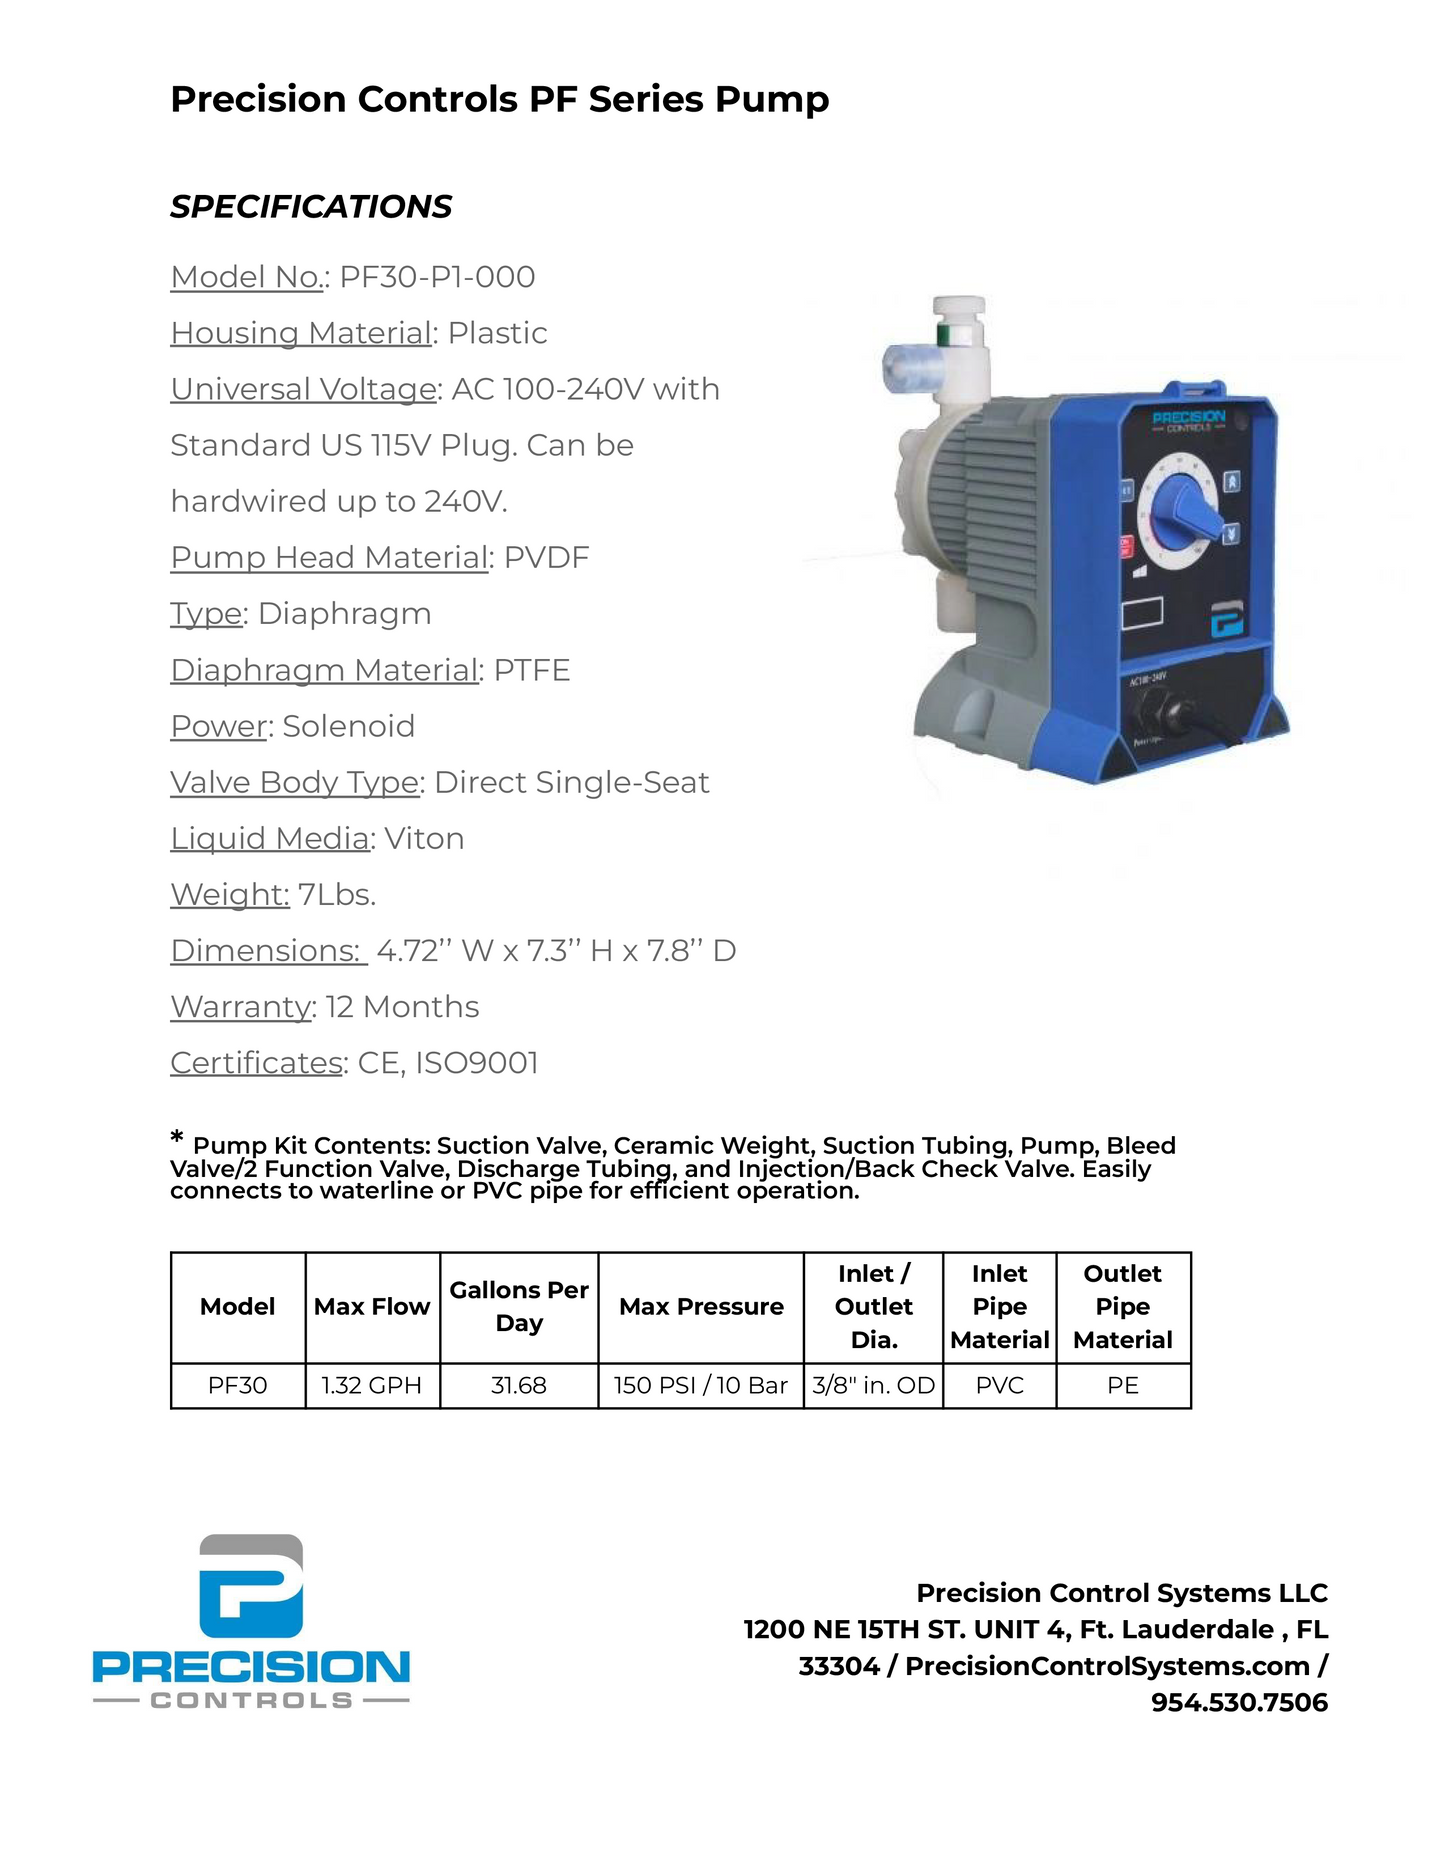 Precision Controls PF Series Dosing Pump - 31.6 Gallons Per Day 150 PSI